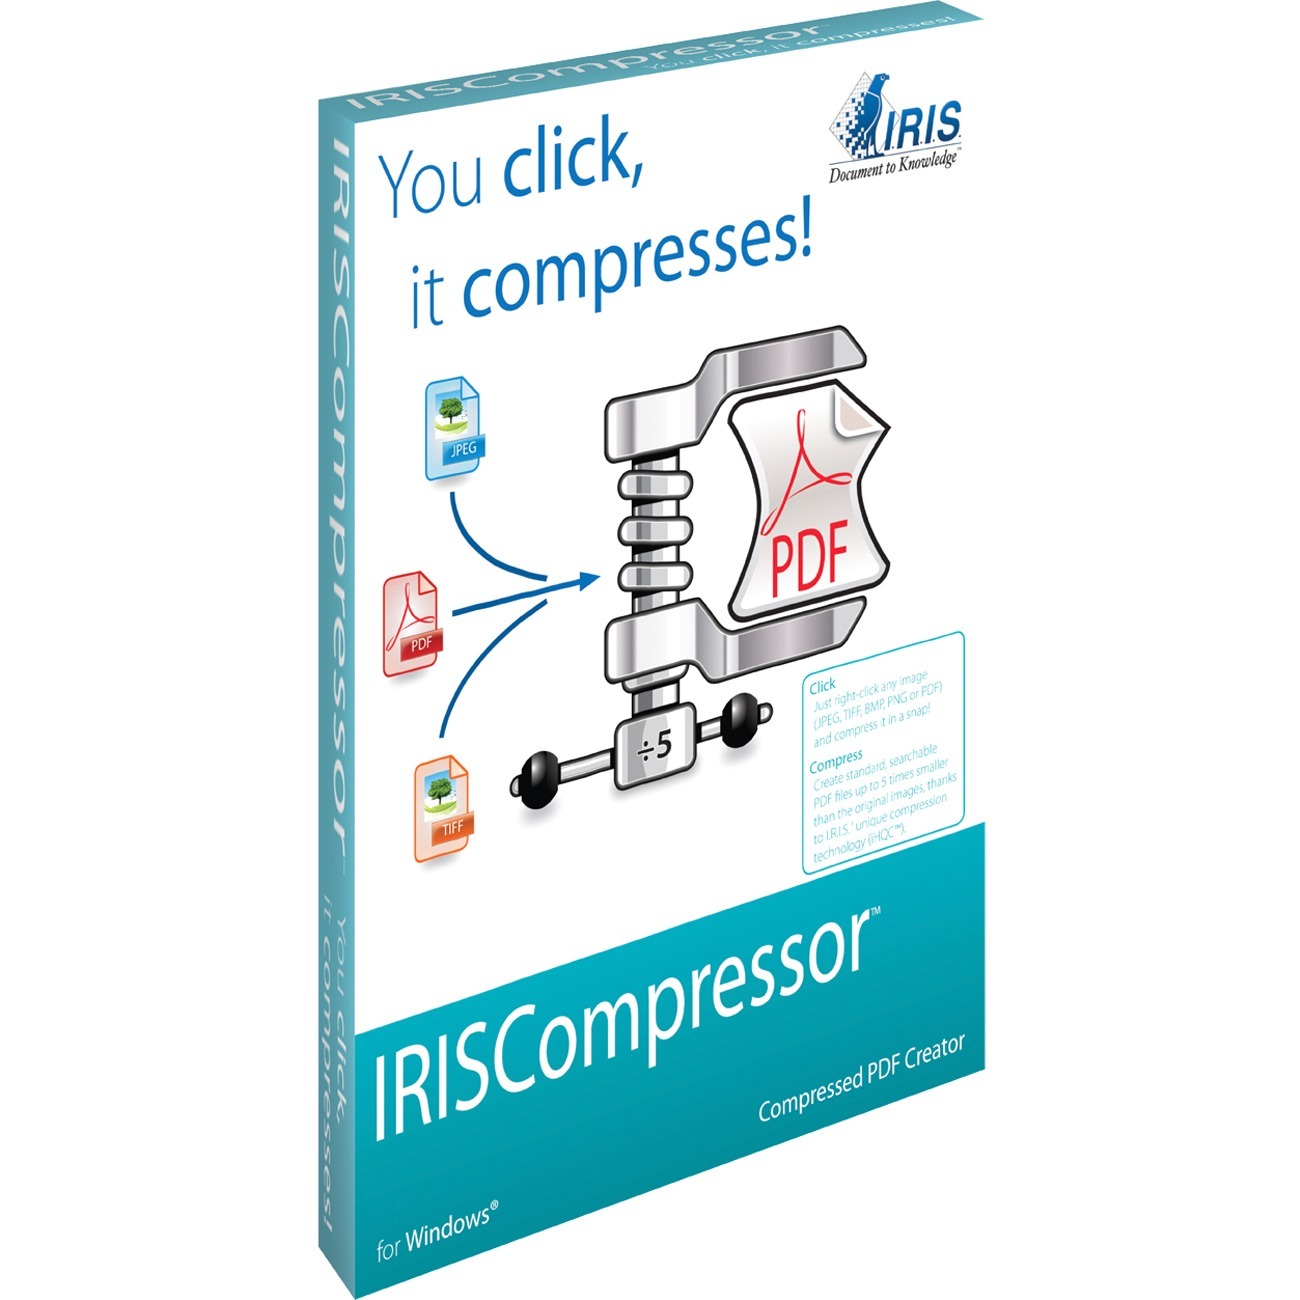 IRIS PDF Compression Software Makes PDFs